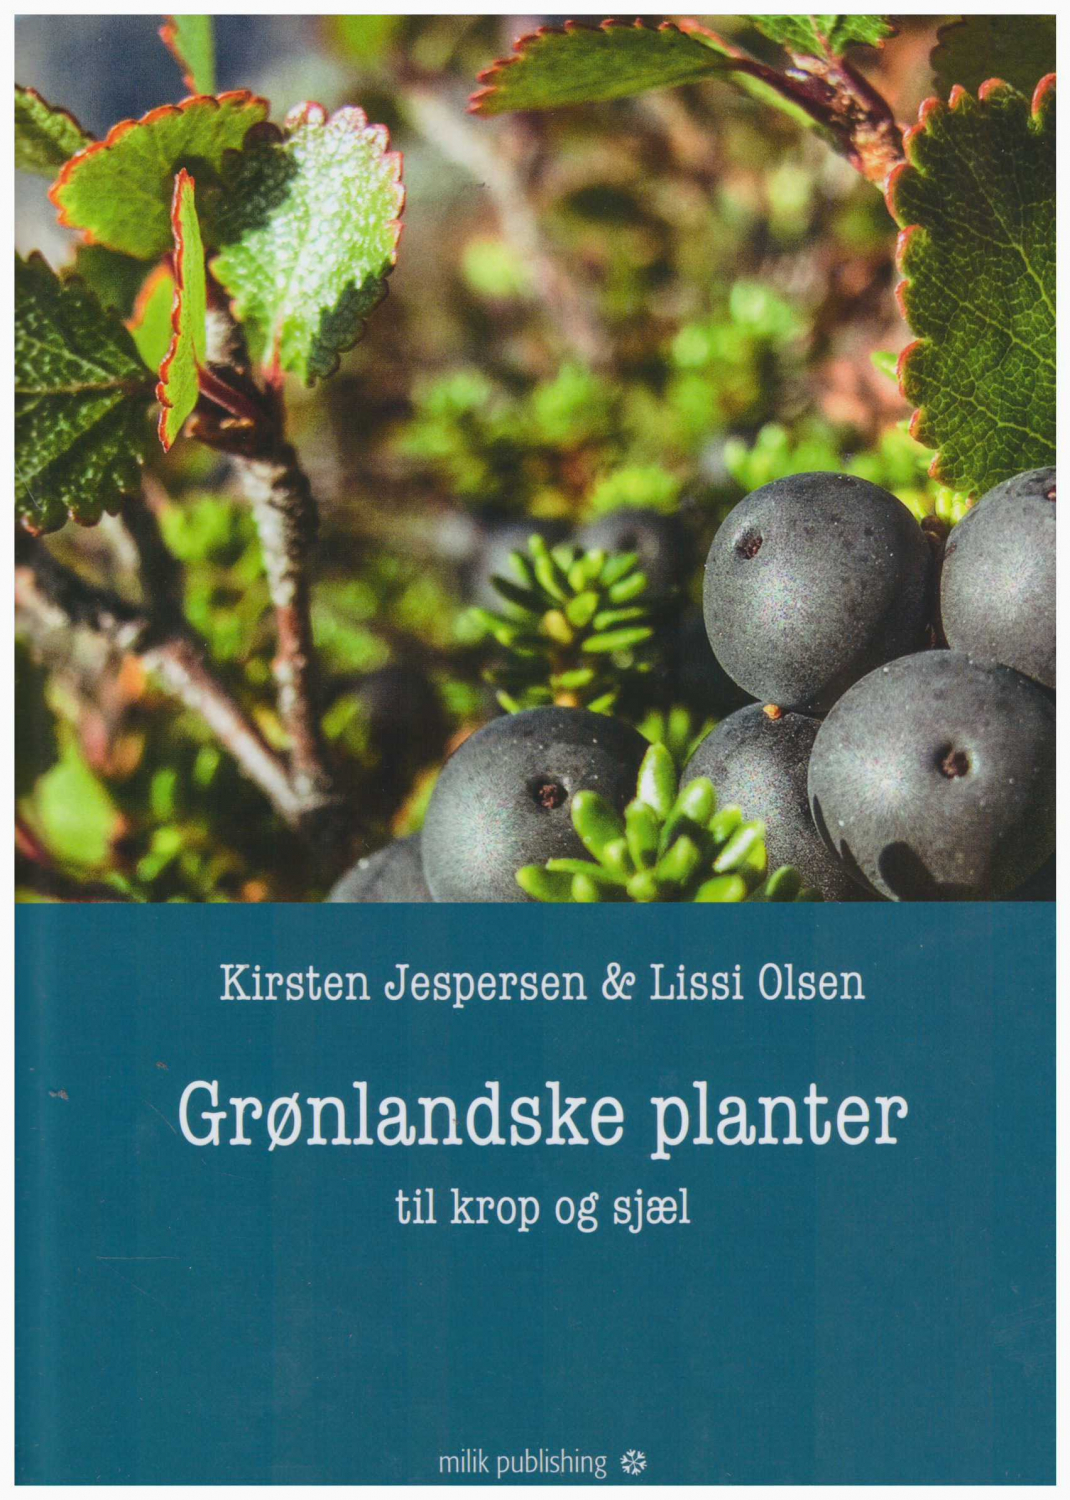 Grønlandske planter Angalaneq pinngortitarlu - Boghandel - Kalaallit Nunaata atuagaarniarfia